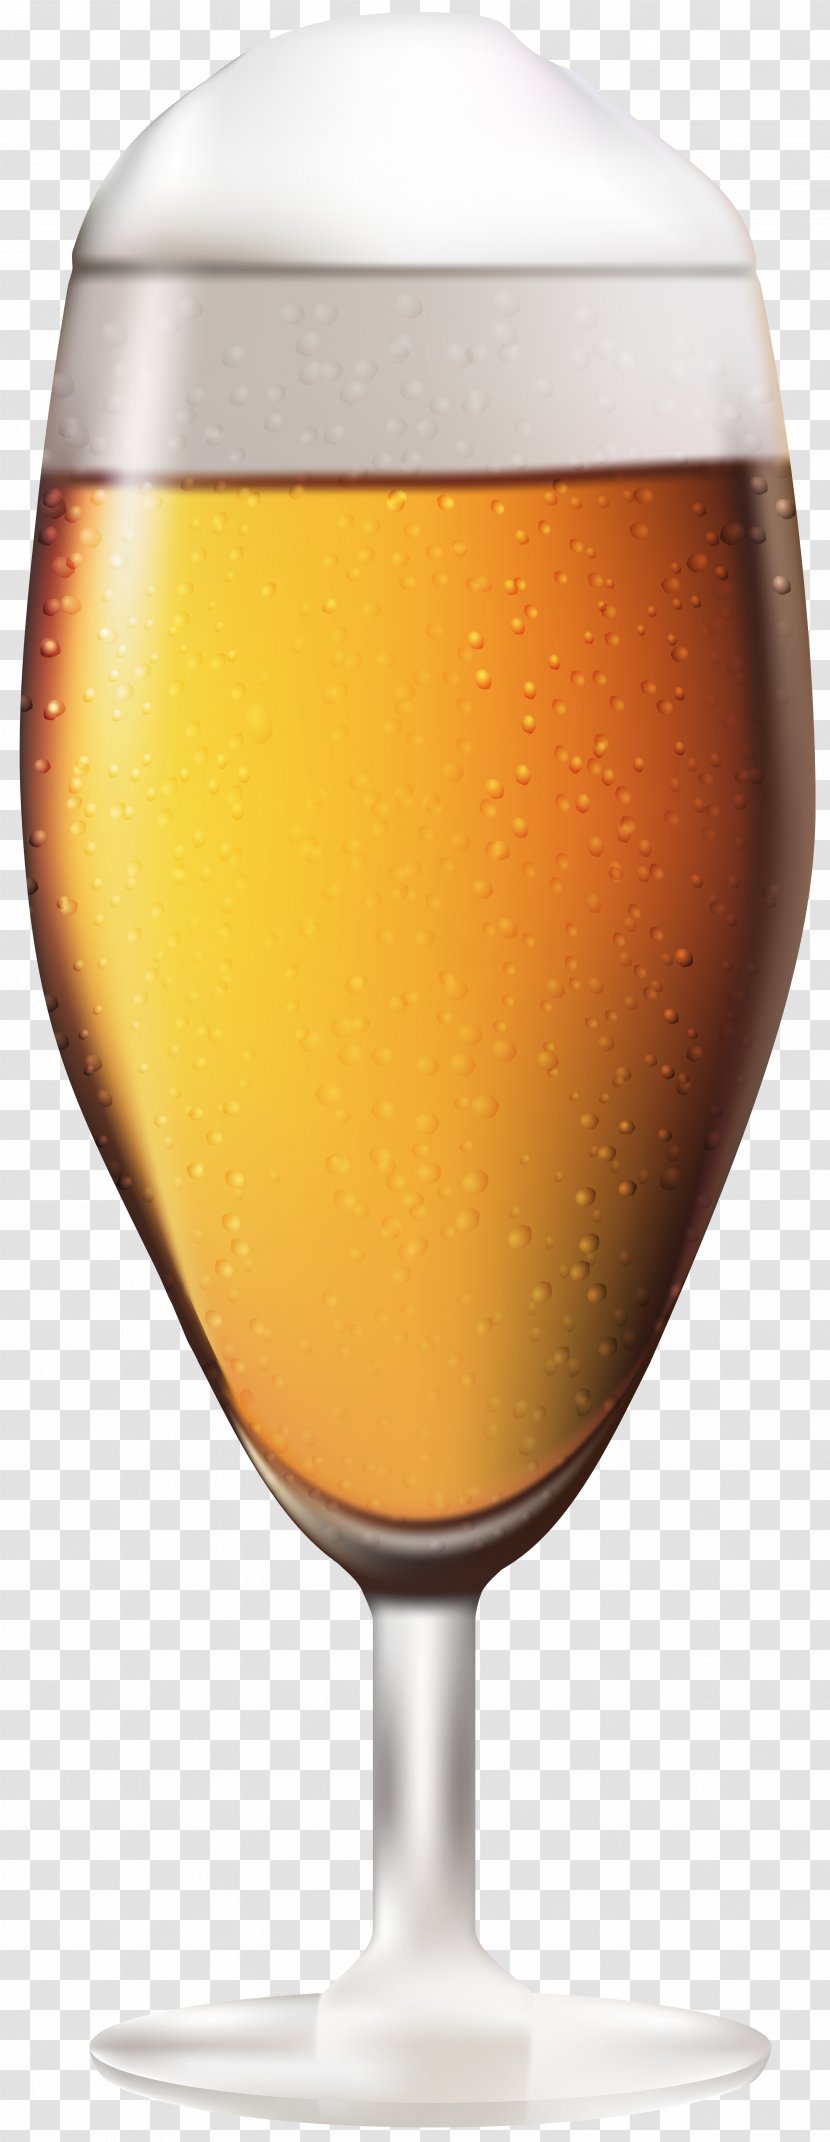 Beer Glasses Wine Glass Imperial Pint - Lager - Sodas Streamer Transparent PNG